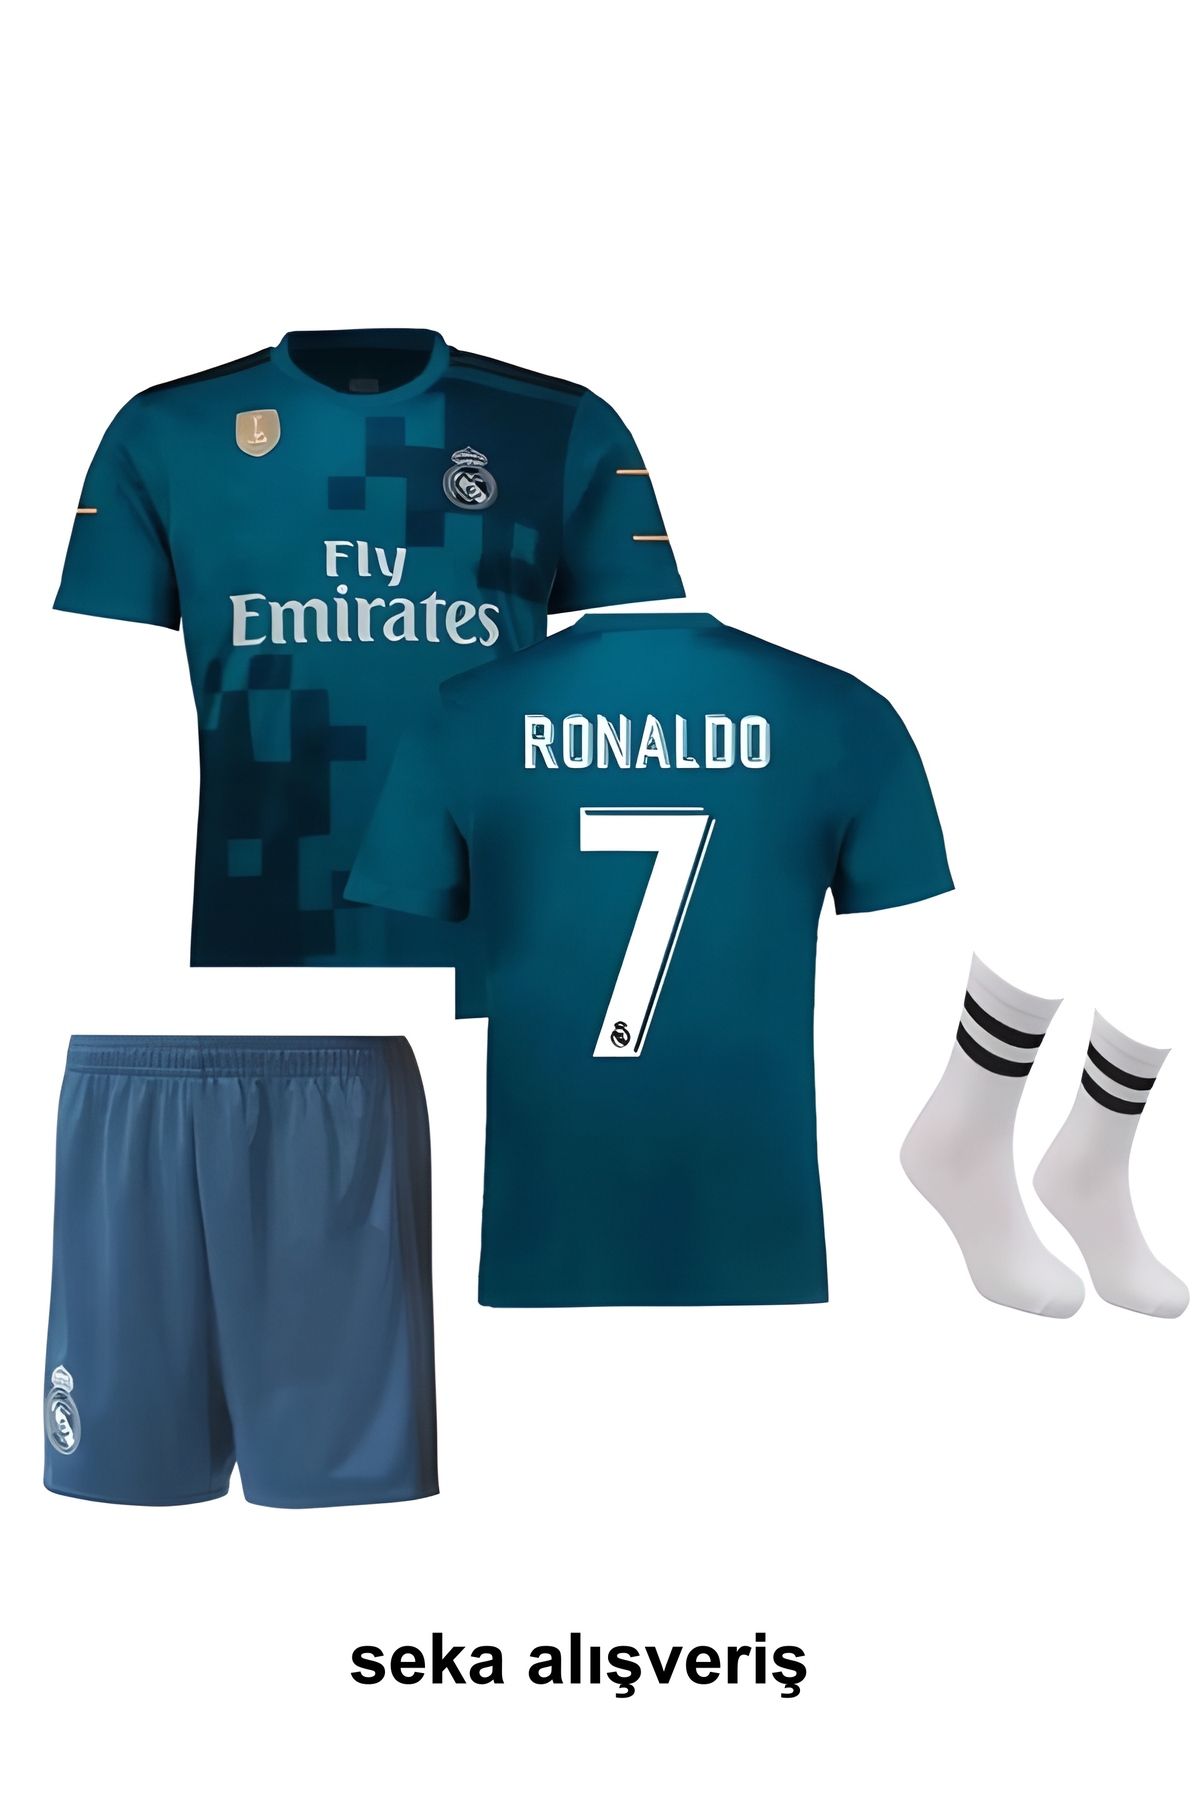 Seka Alışveriş Ronaldo Turkuaz Real Madrid 2018 Deplasman Çoçuk Forma Seti